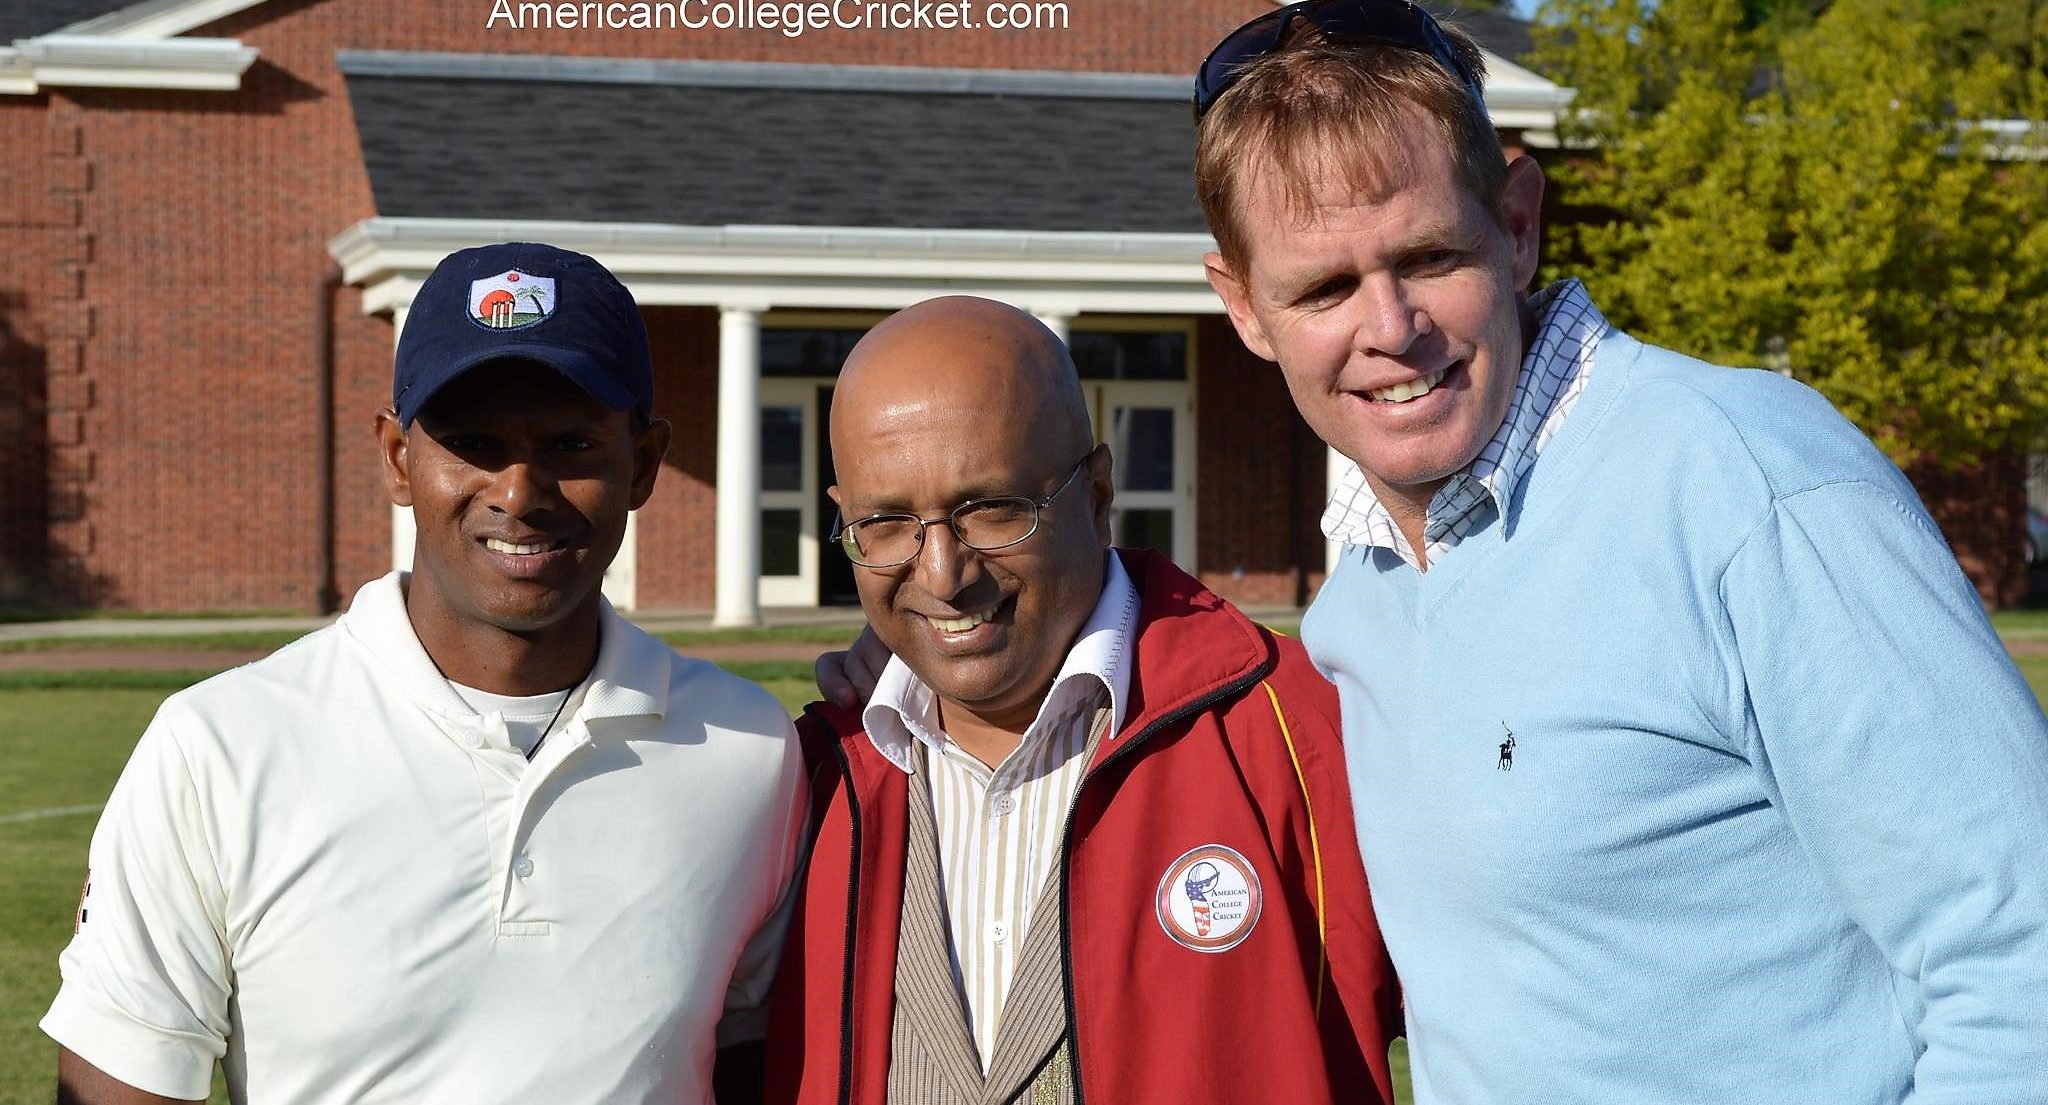 Lloyd with Shiv Chanderpaul and Shaun Pollock,USA